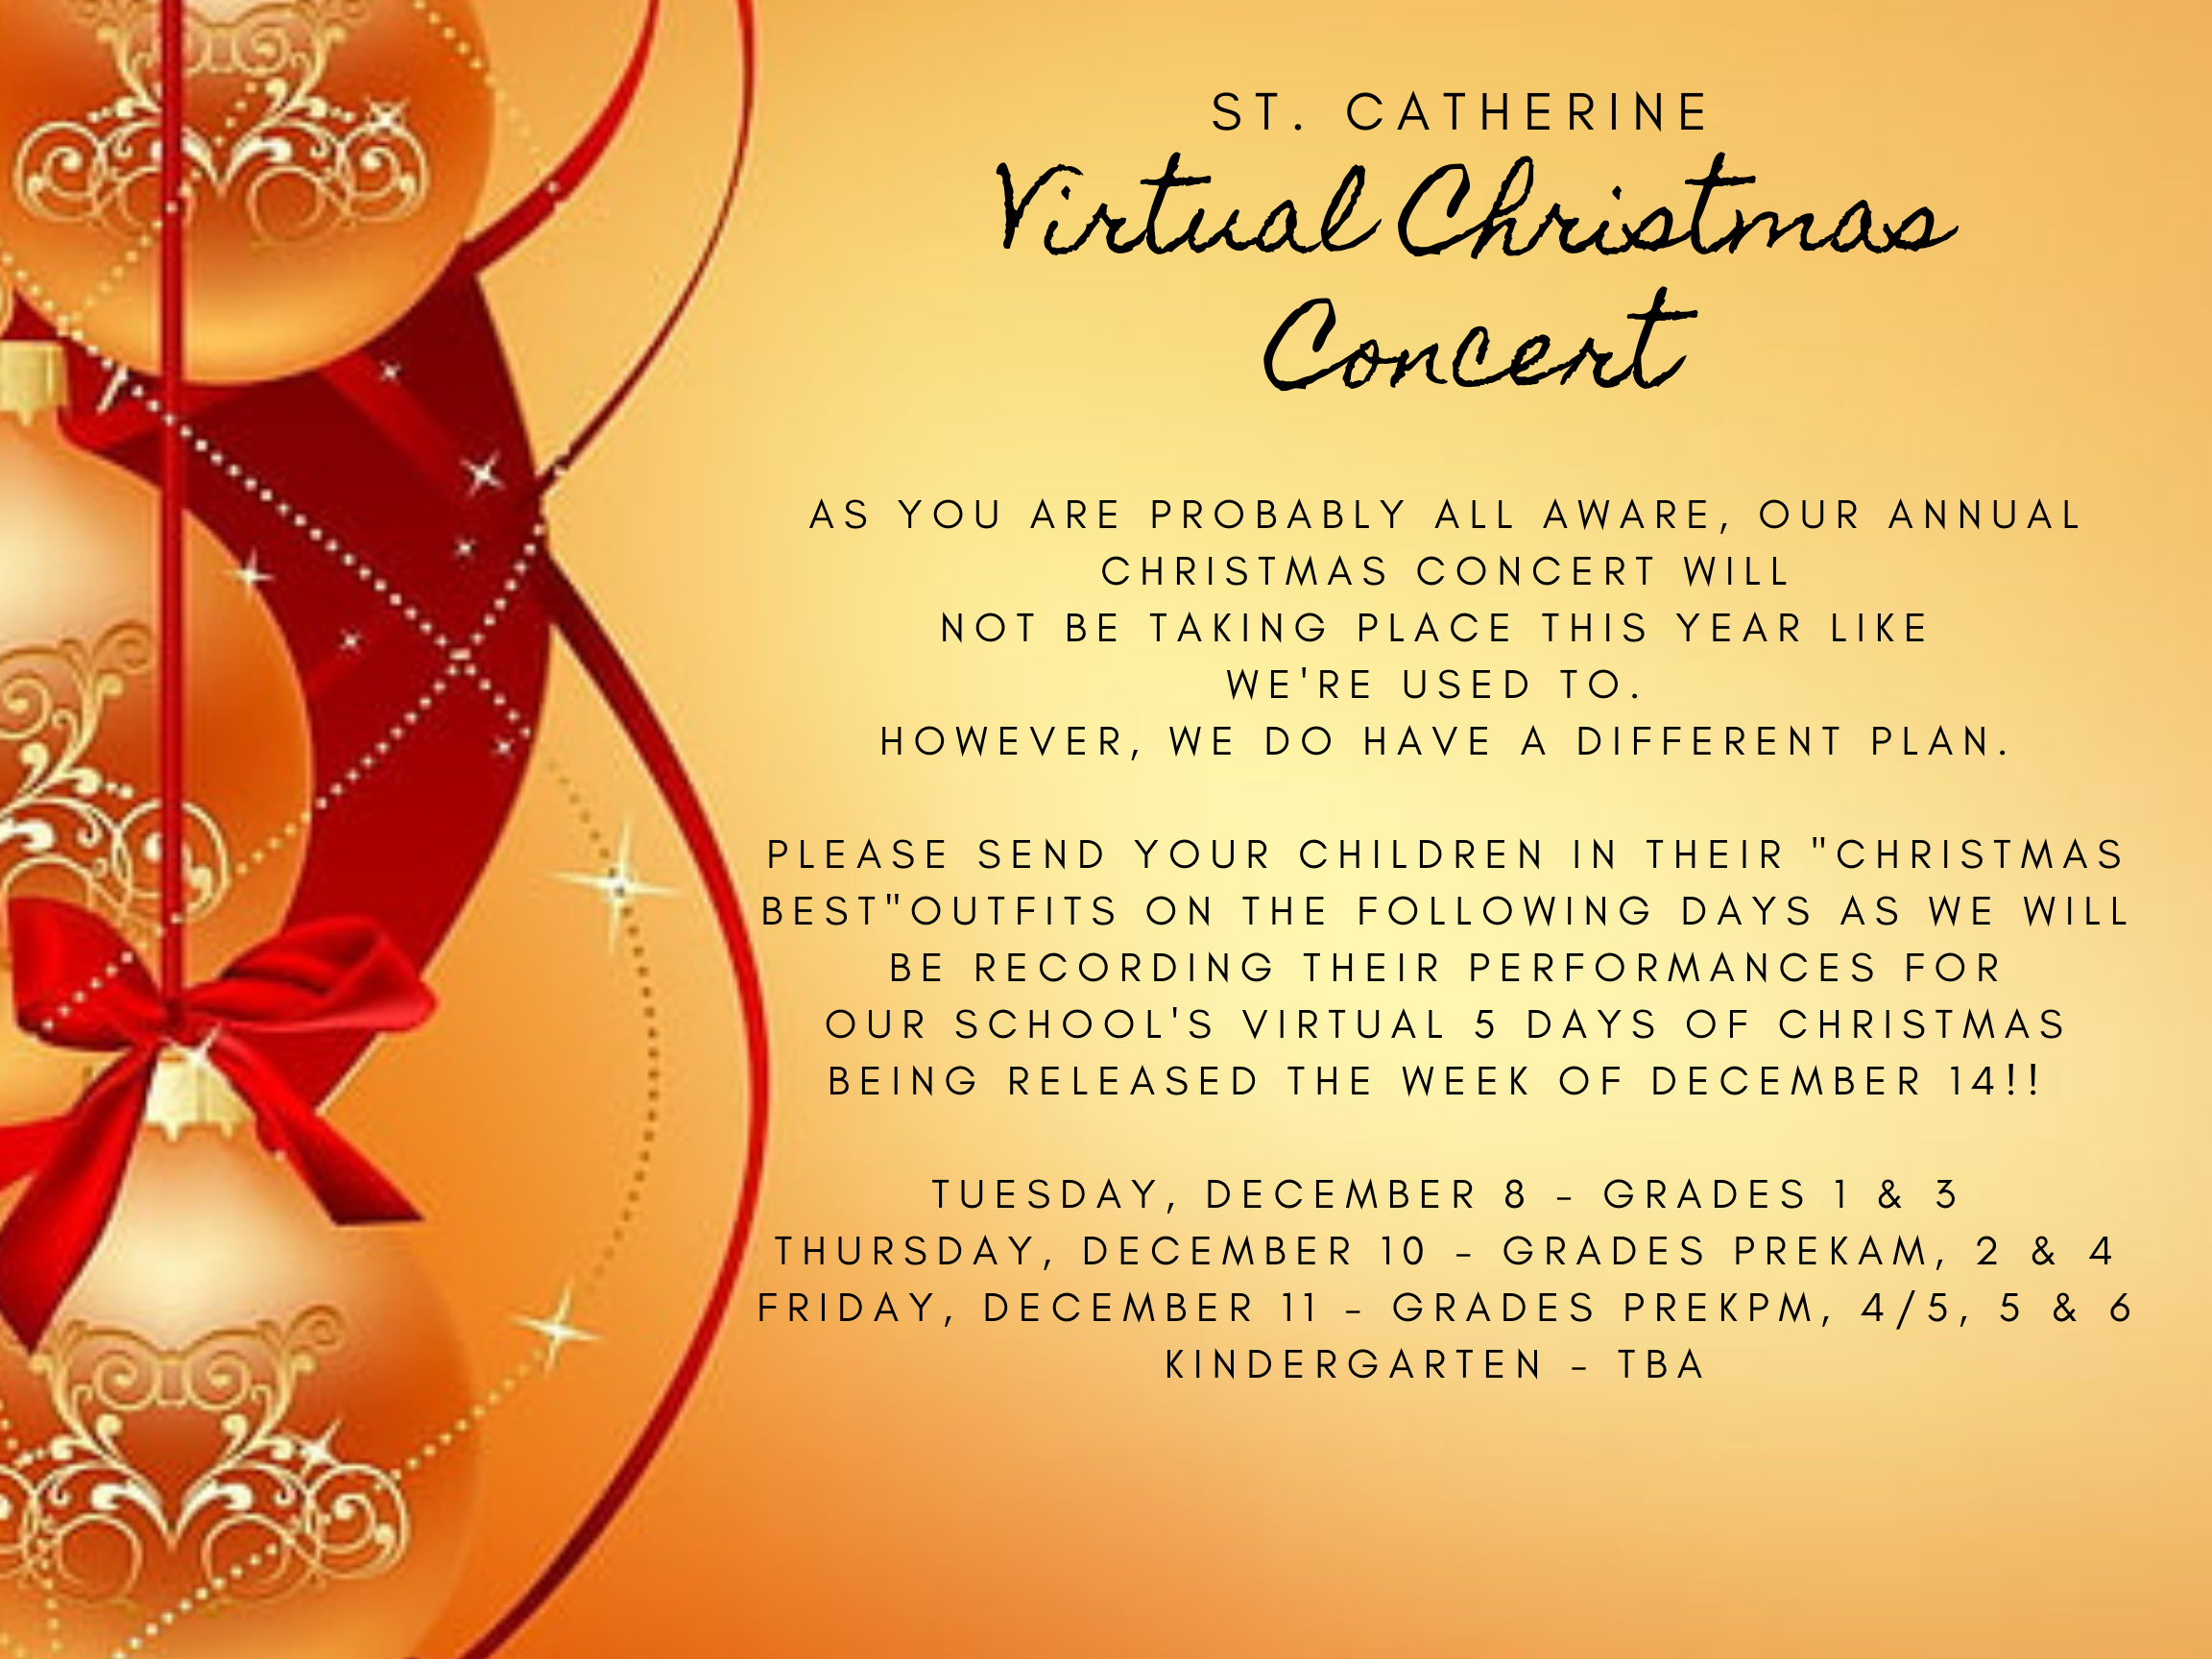 St. Catherine Virtual Christmas Concert